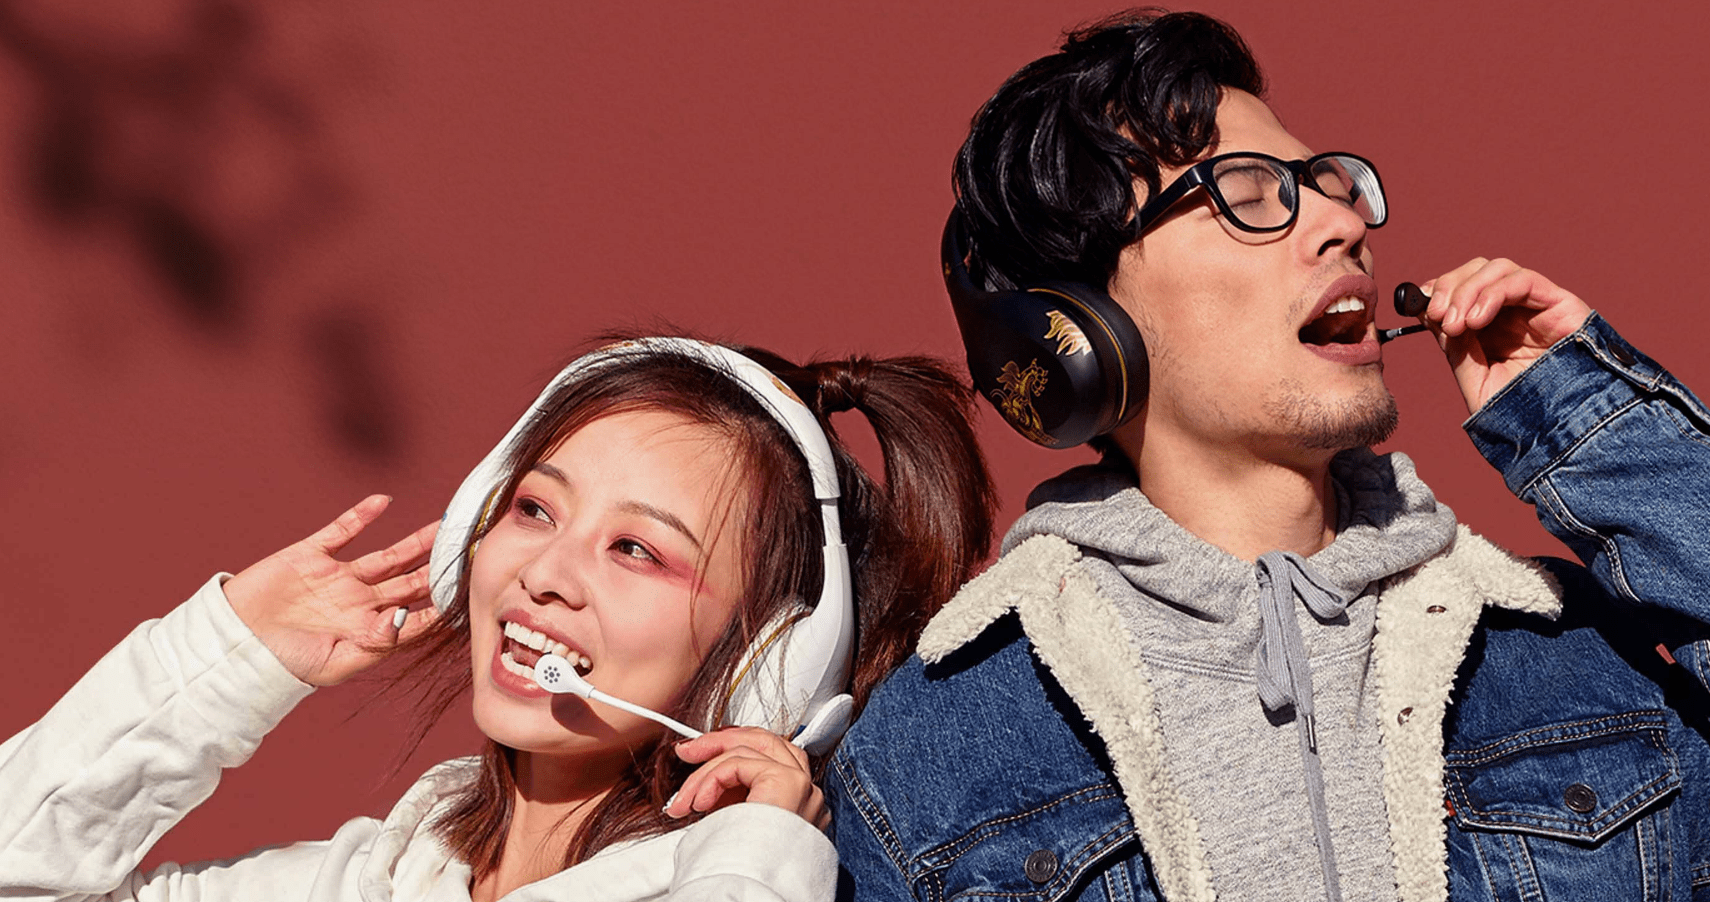 Mi bluetooth karaoke headphones forbidden city edition is the xiaomi’s secret device